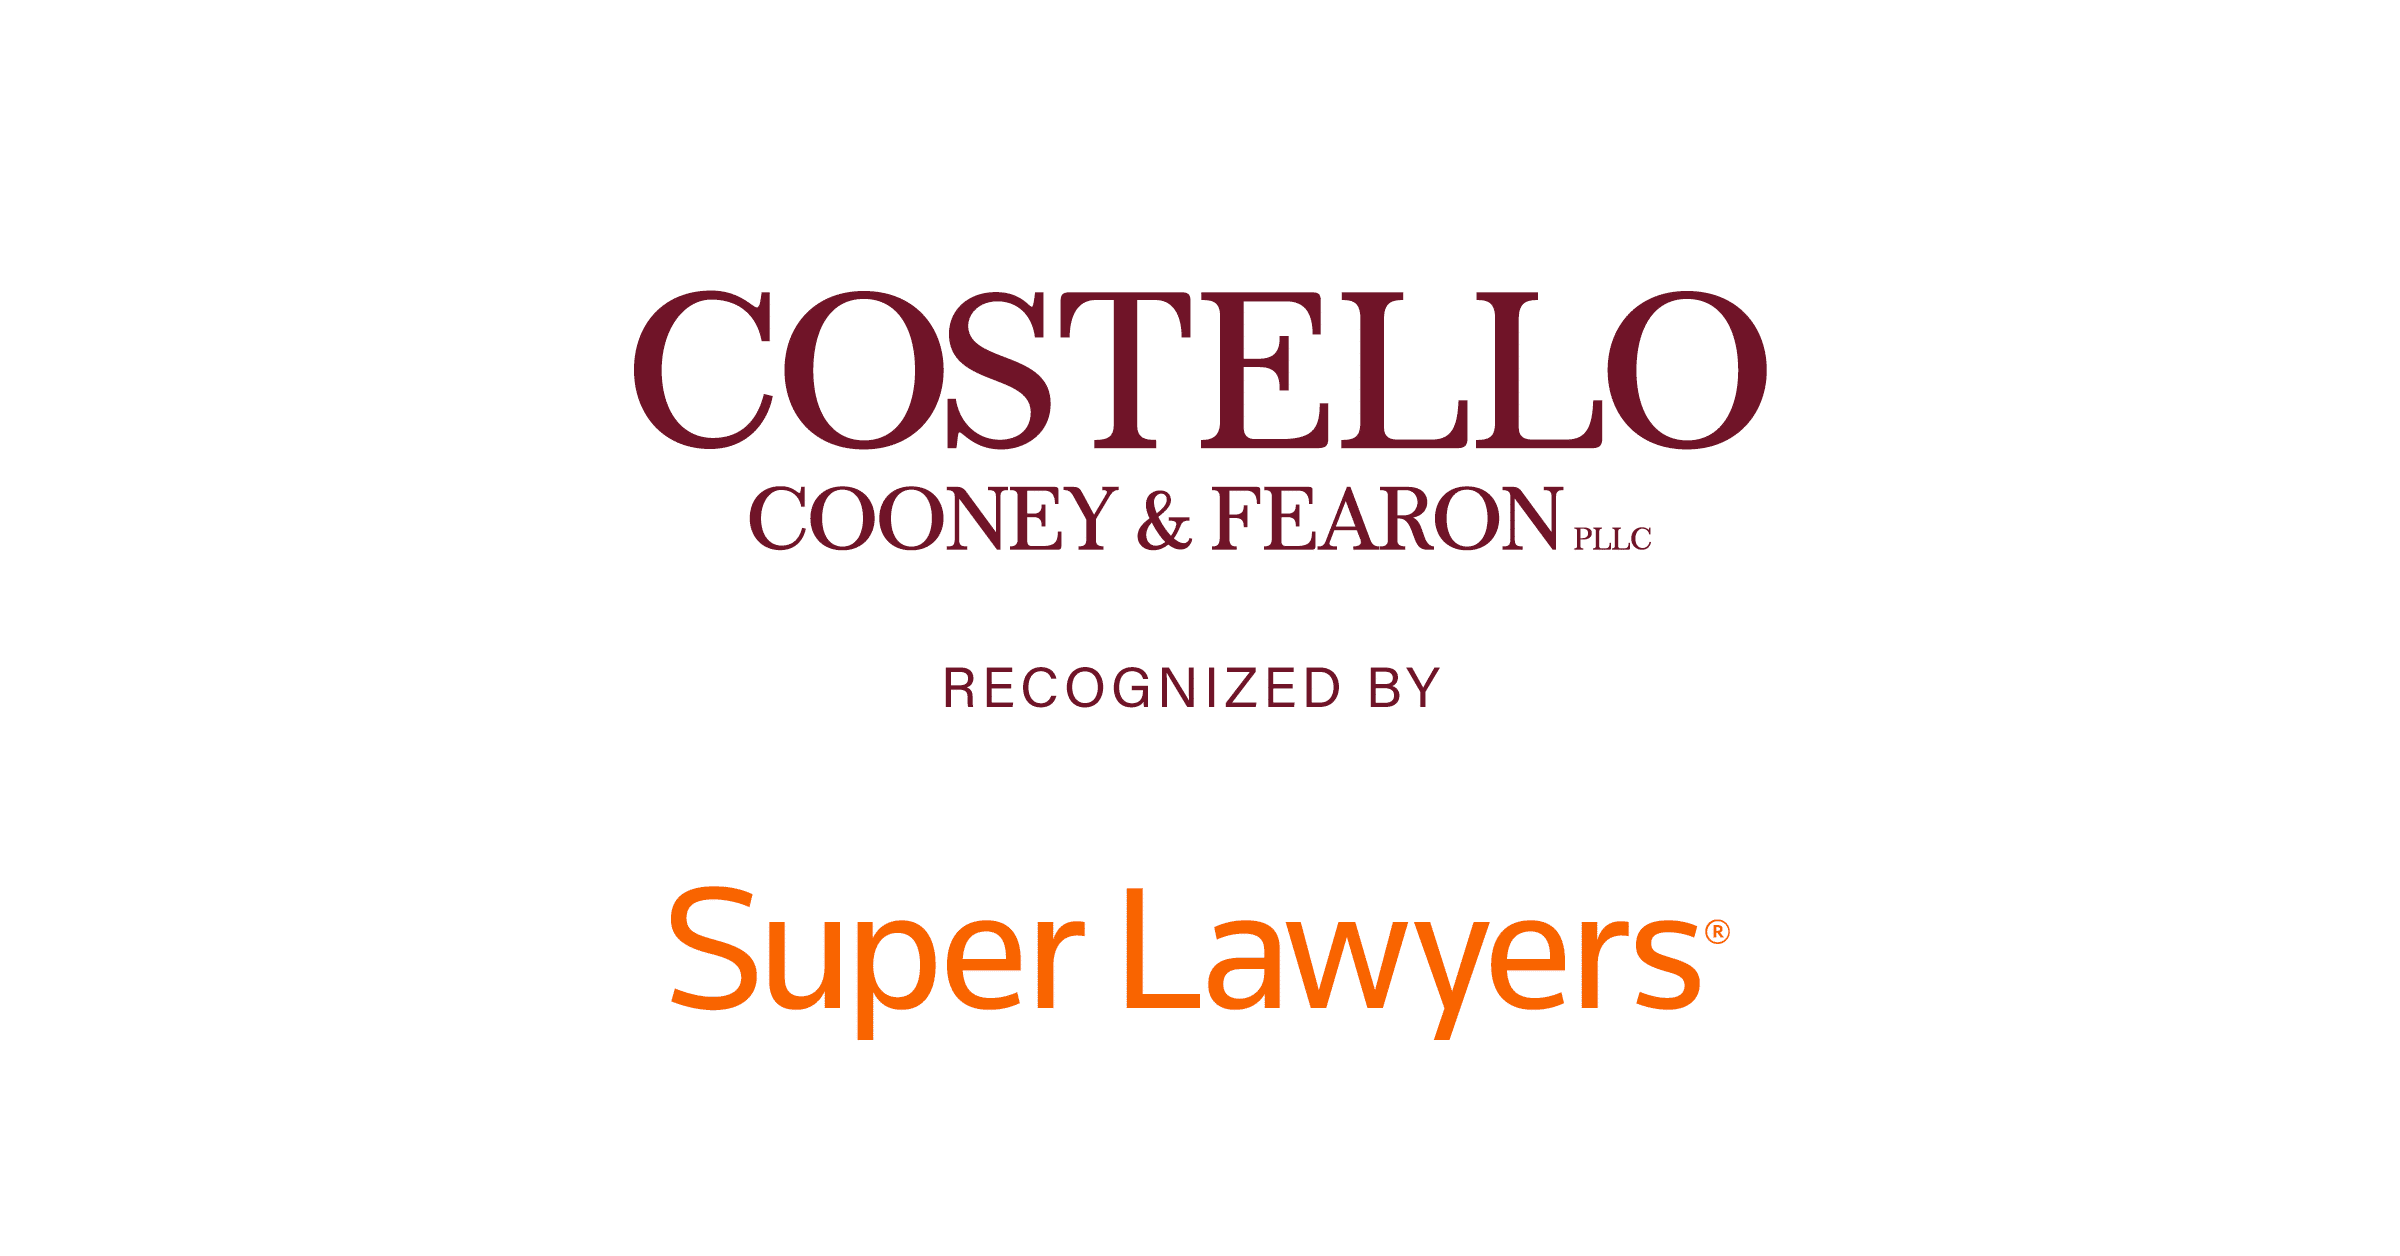 Company News - Costello, Cooney & Fearon, PLLC